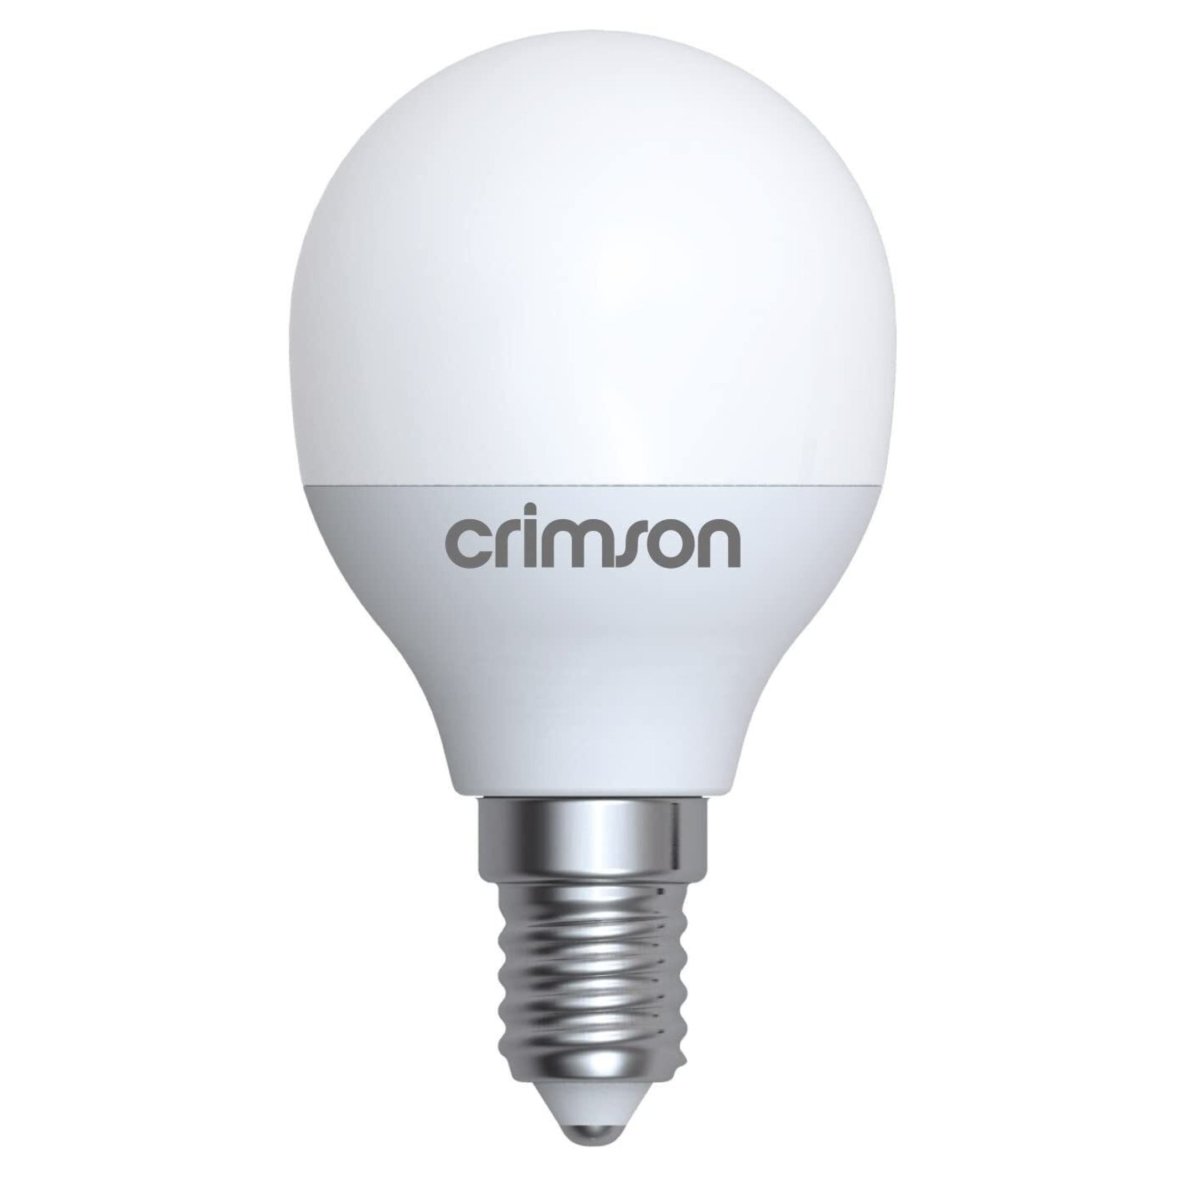 LED Golf Bulb Dimmable 5W Energy Saving Bulb E14 Warm White - Bonnypack